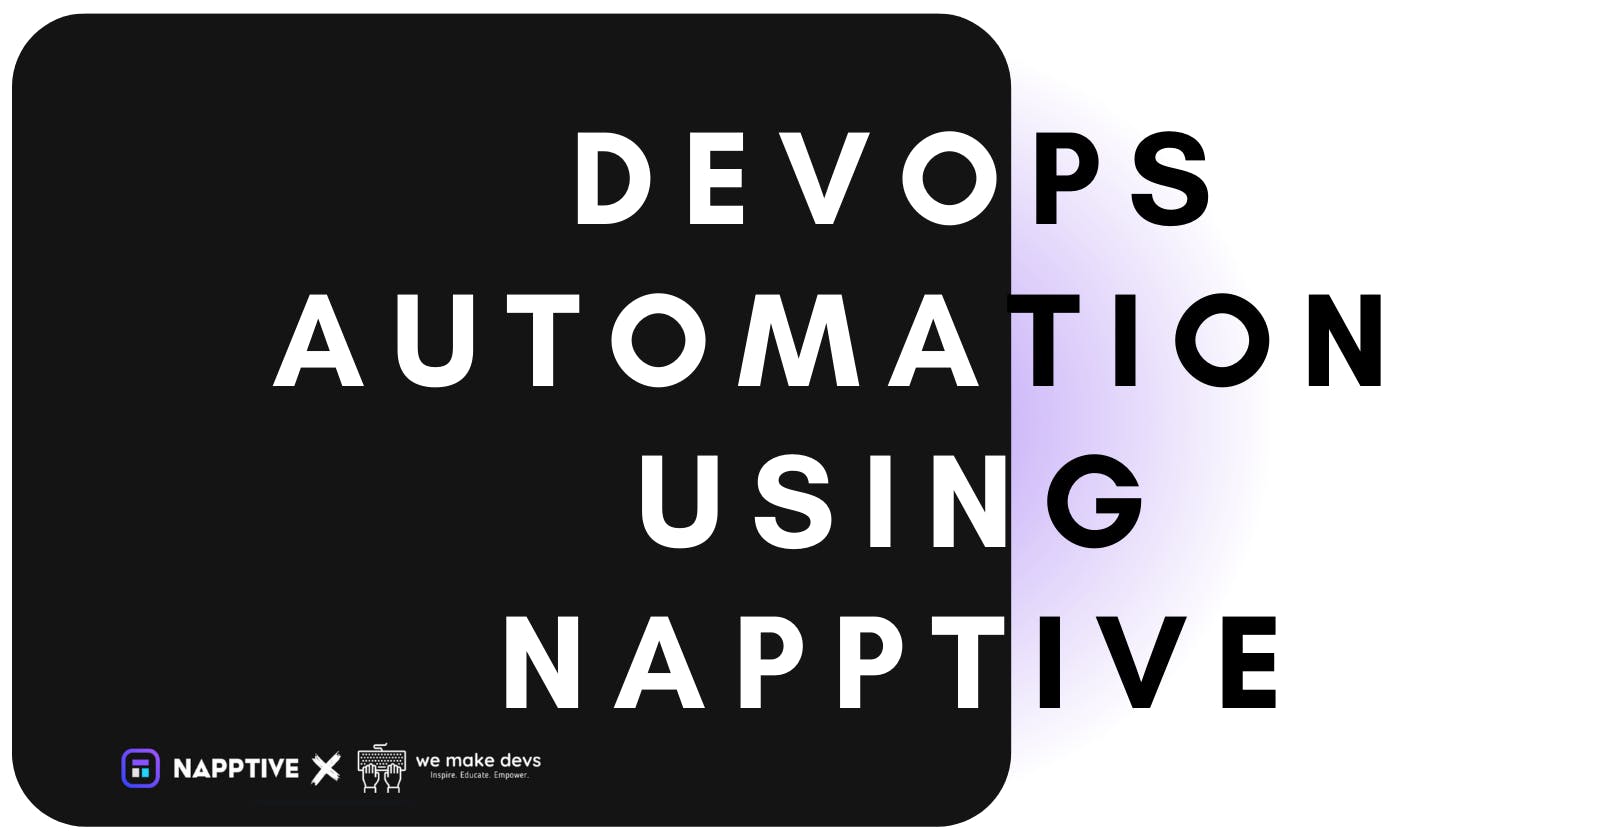 DevOps Automation using Napptive